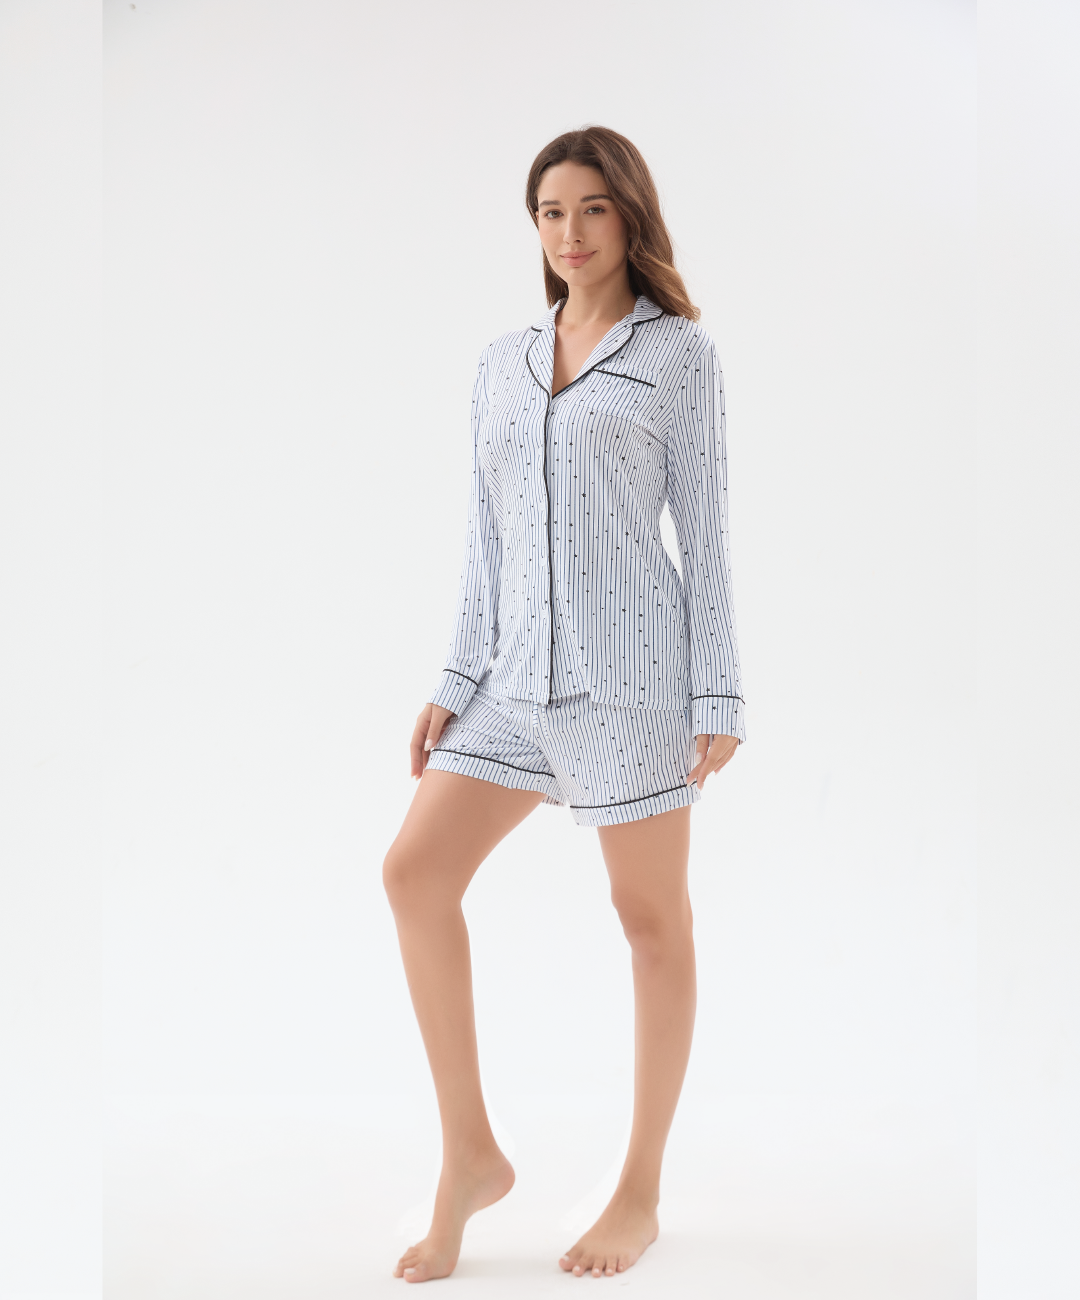 Cool Jammies Bamboo Cooling Long Sleeve Sleepwear Pajama Set